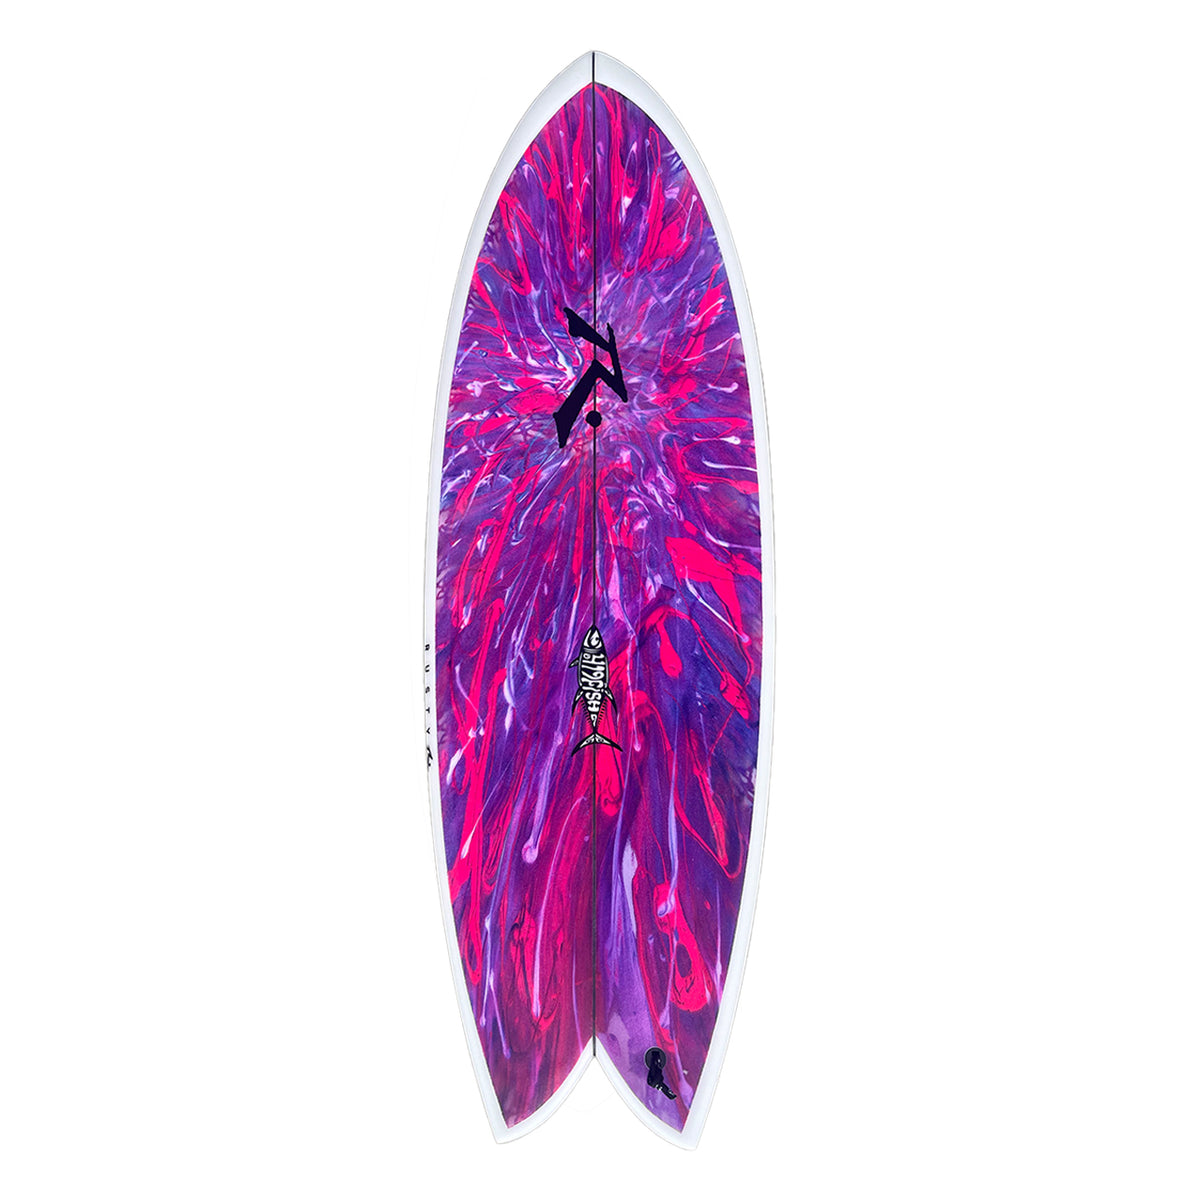 419fish - Alternative - Rusty Surfboards - Top View - Pink Swirl